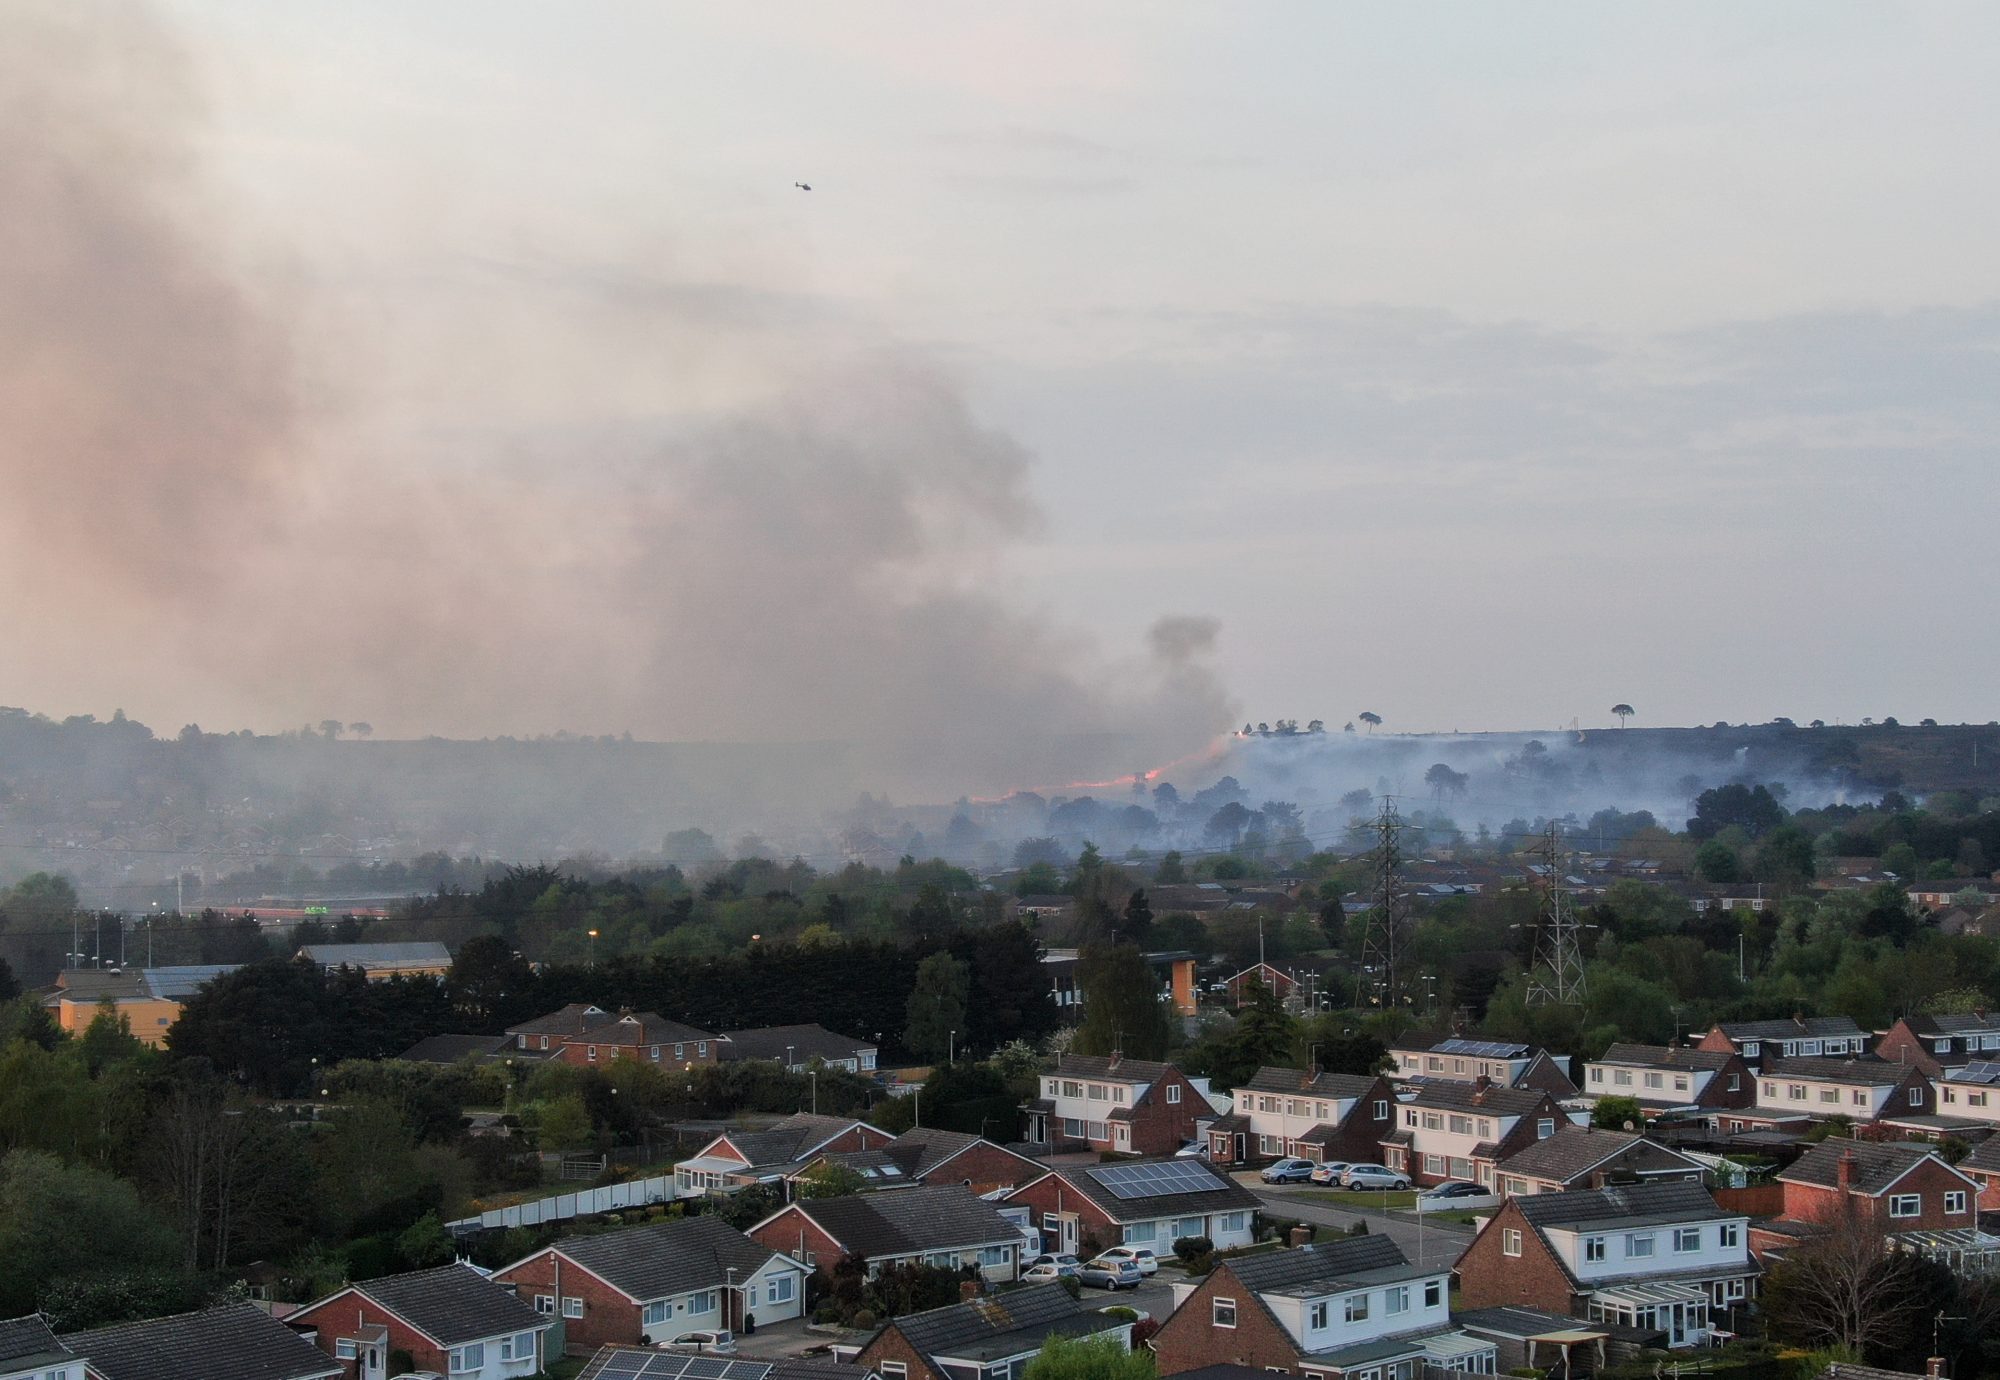 Dangerous wildfire spreading on heathland near houses in Poole, Dorset 2022